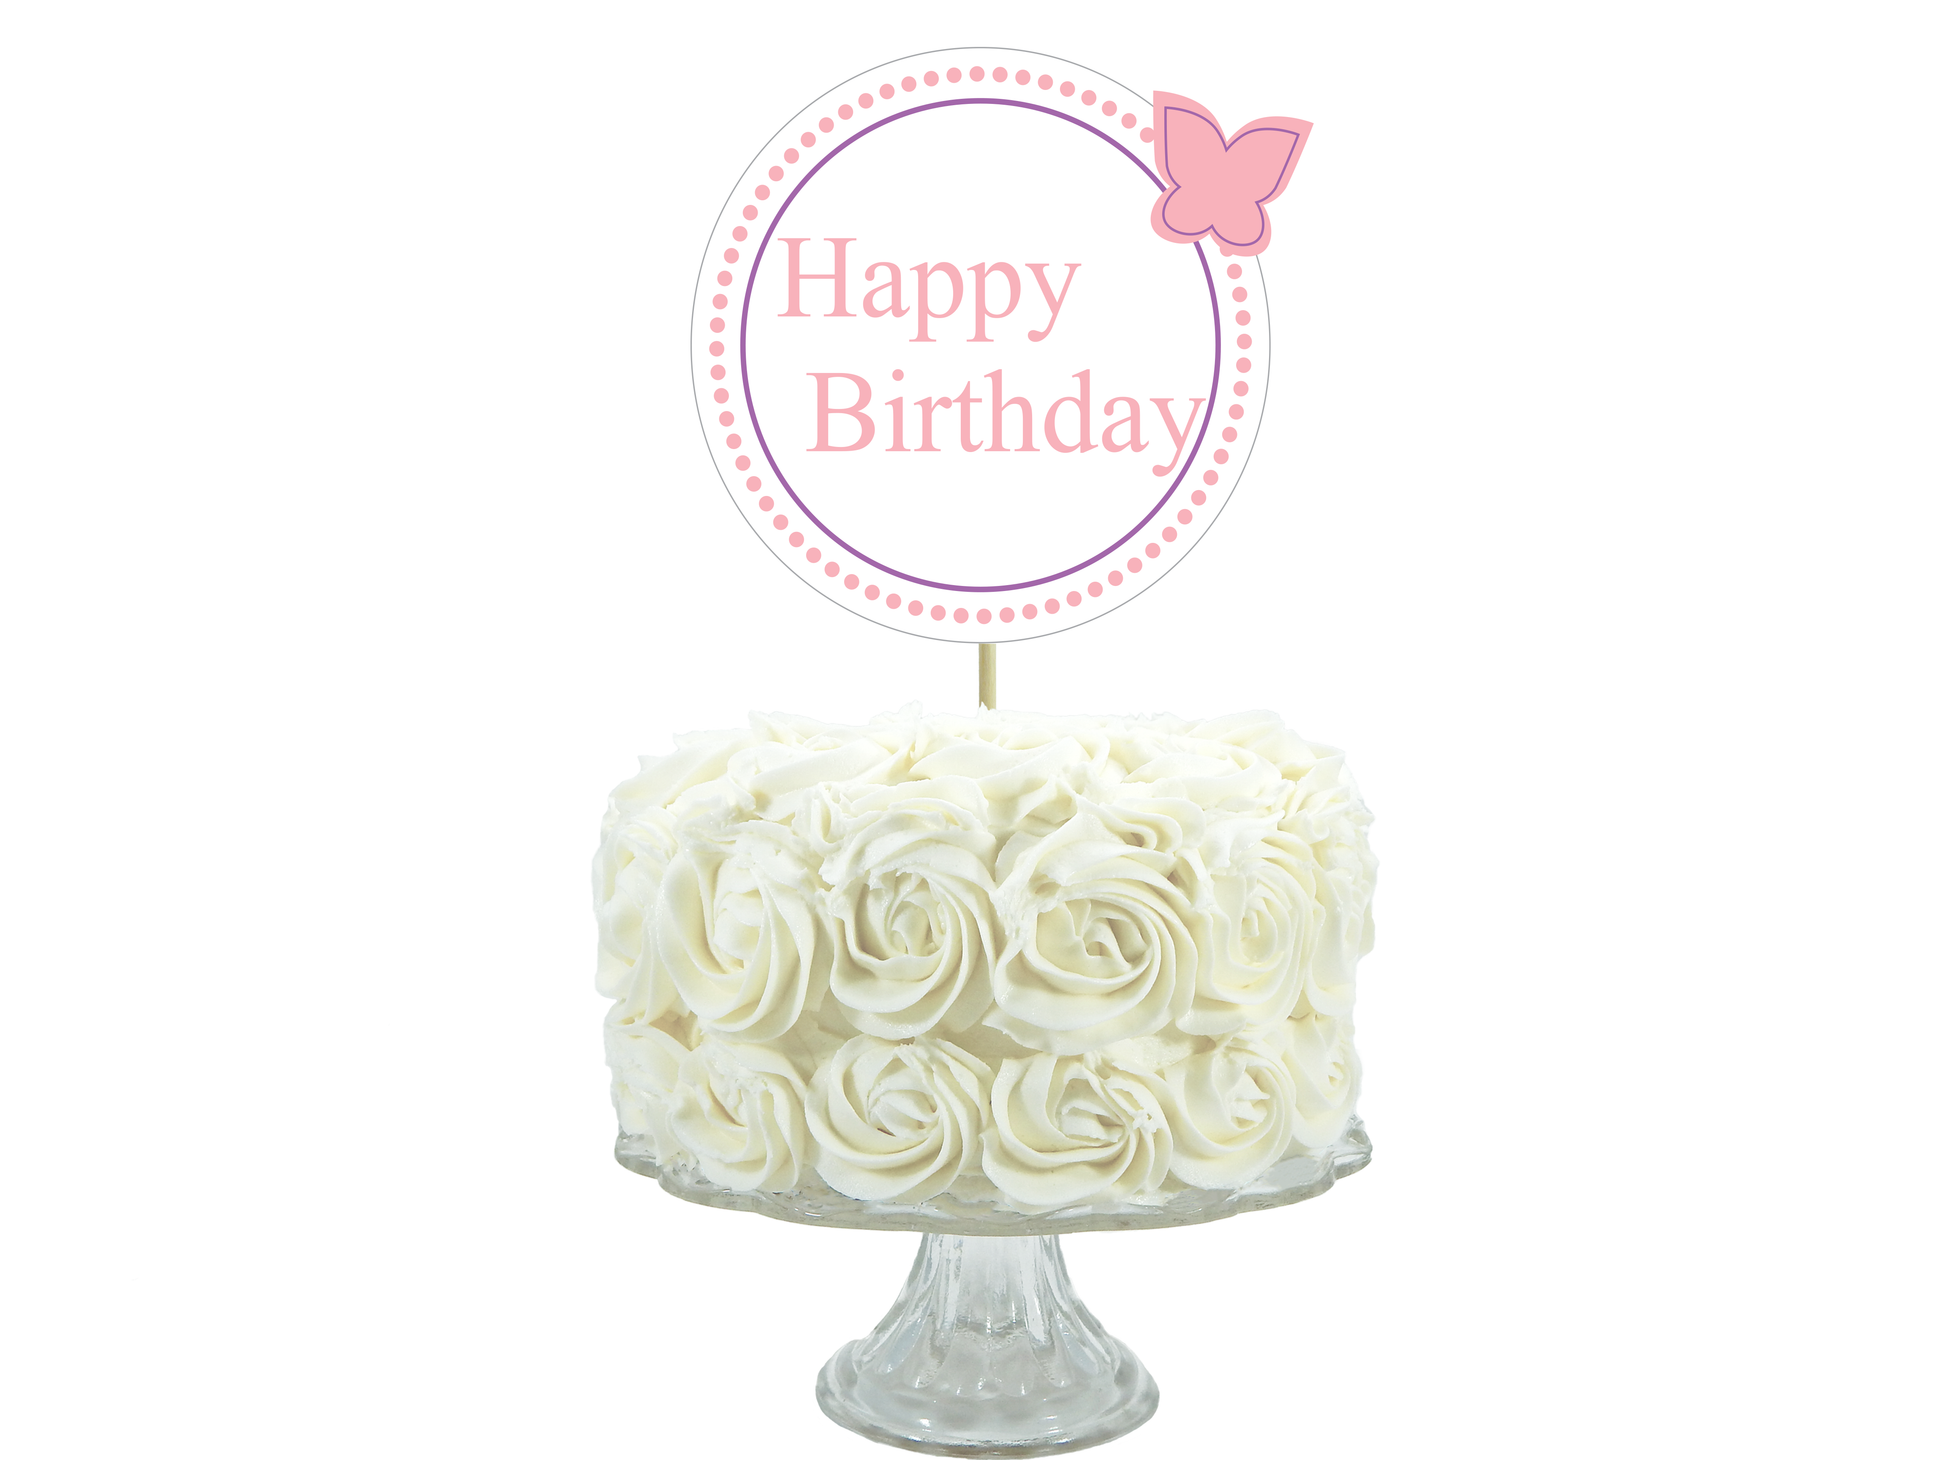 Printable happy birthday cake topper - Celebrating Together